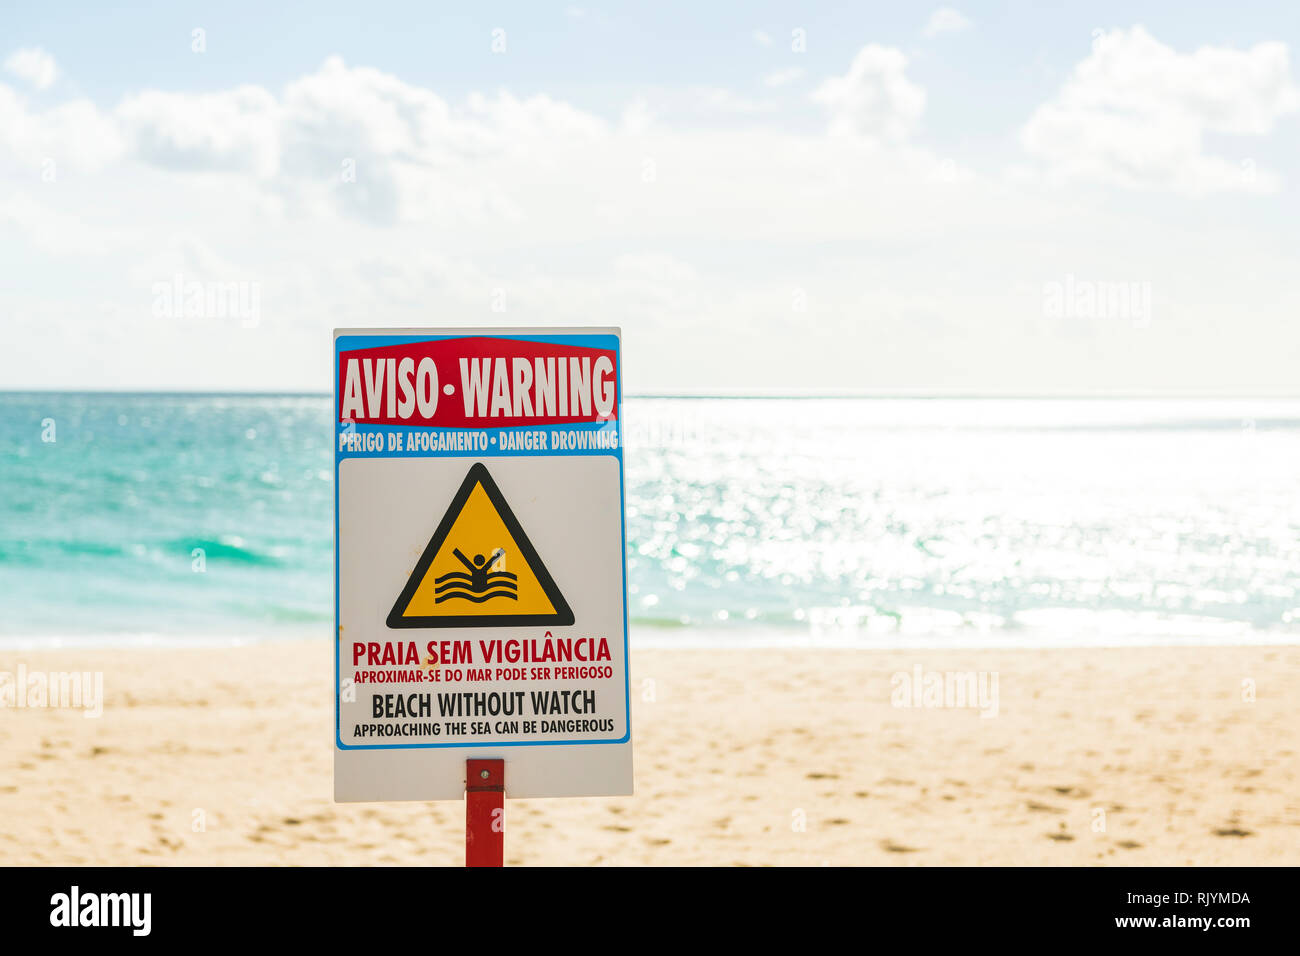 Lifeguard warning sign on beach, Alvor, Algarve, Portugal, Europe Stock Photo